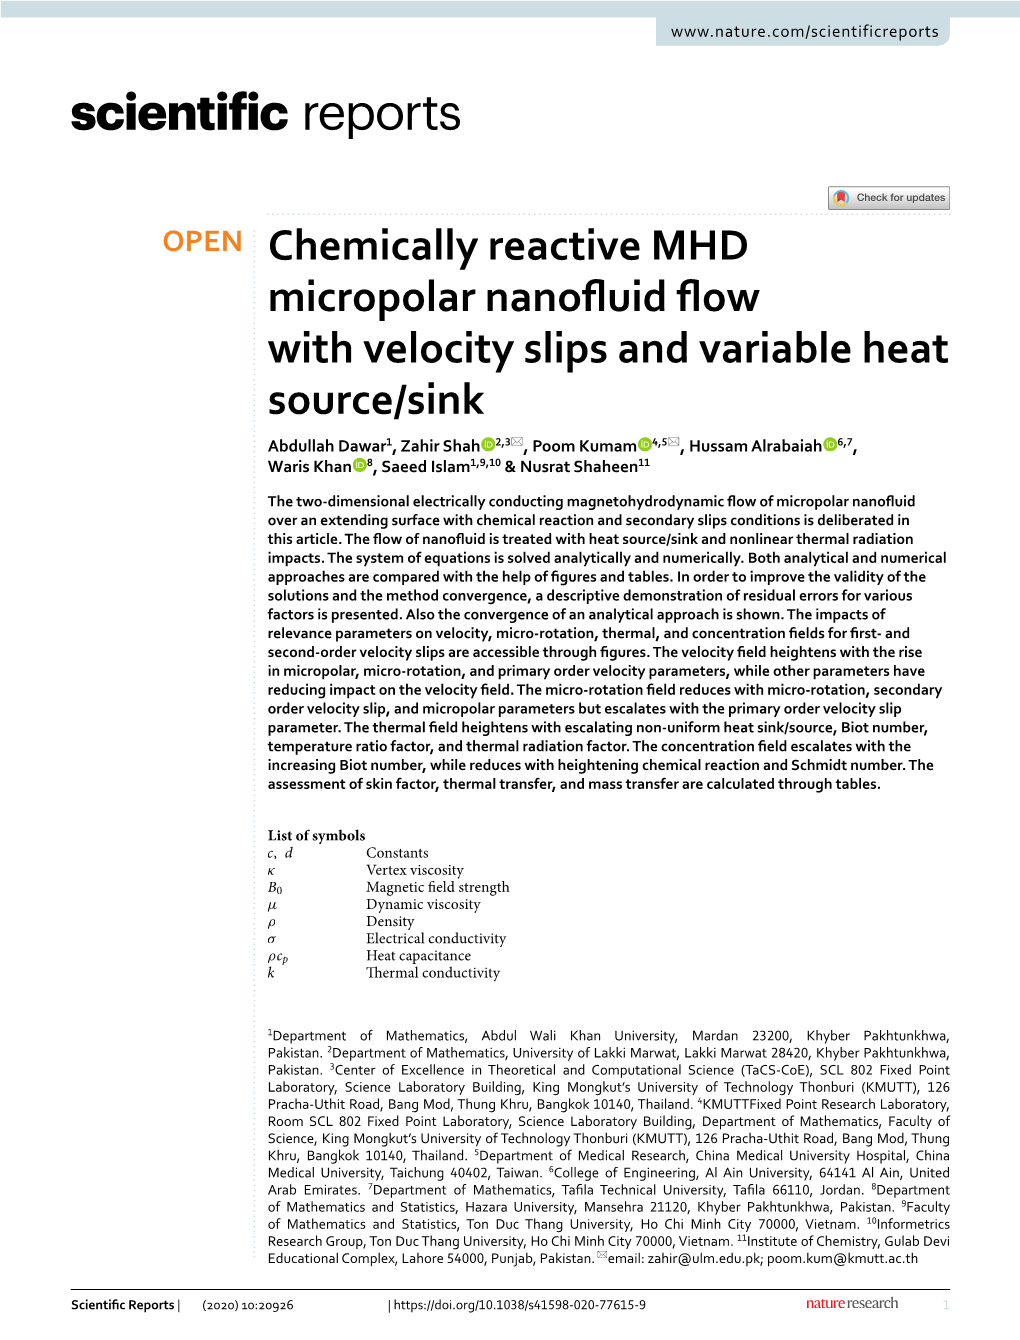 Chemically Reactive MHD Micropolar Nanofluid Flow with Velocity Slips